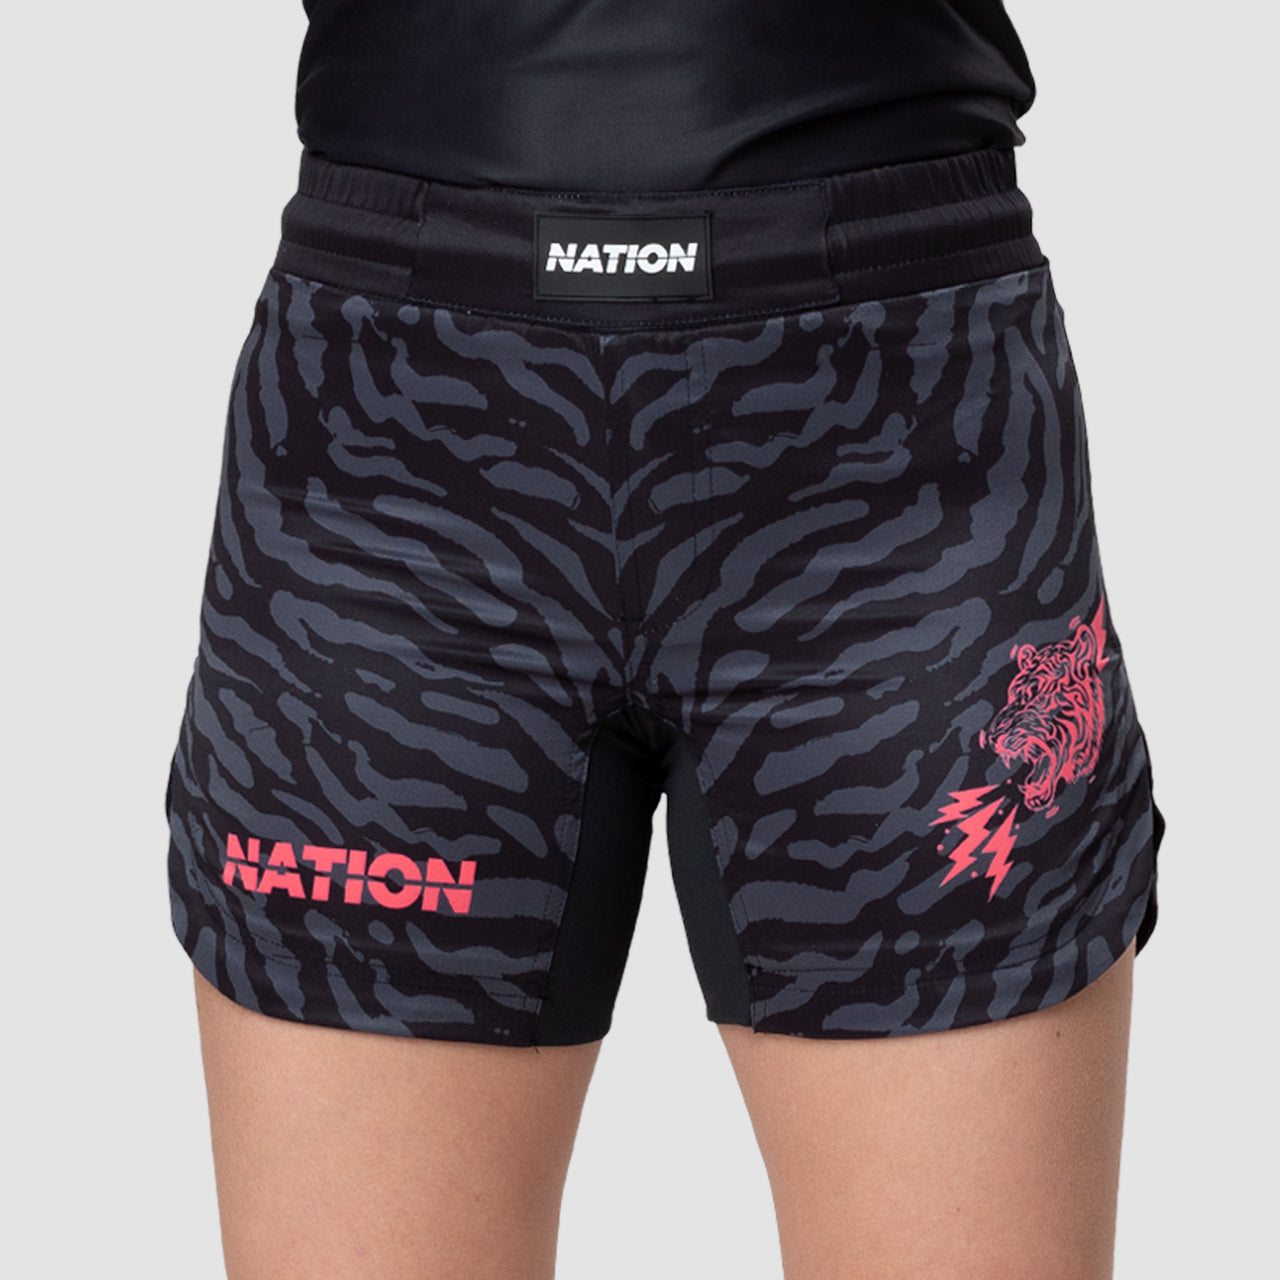 Nation Athletic "Tiger Roar" Women's Shorts - Pink